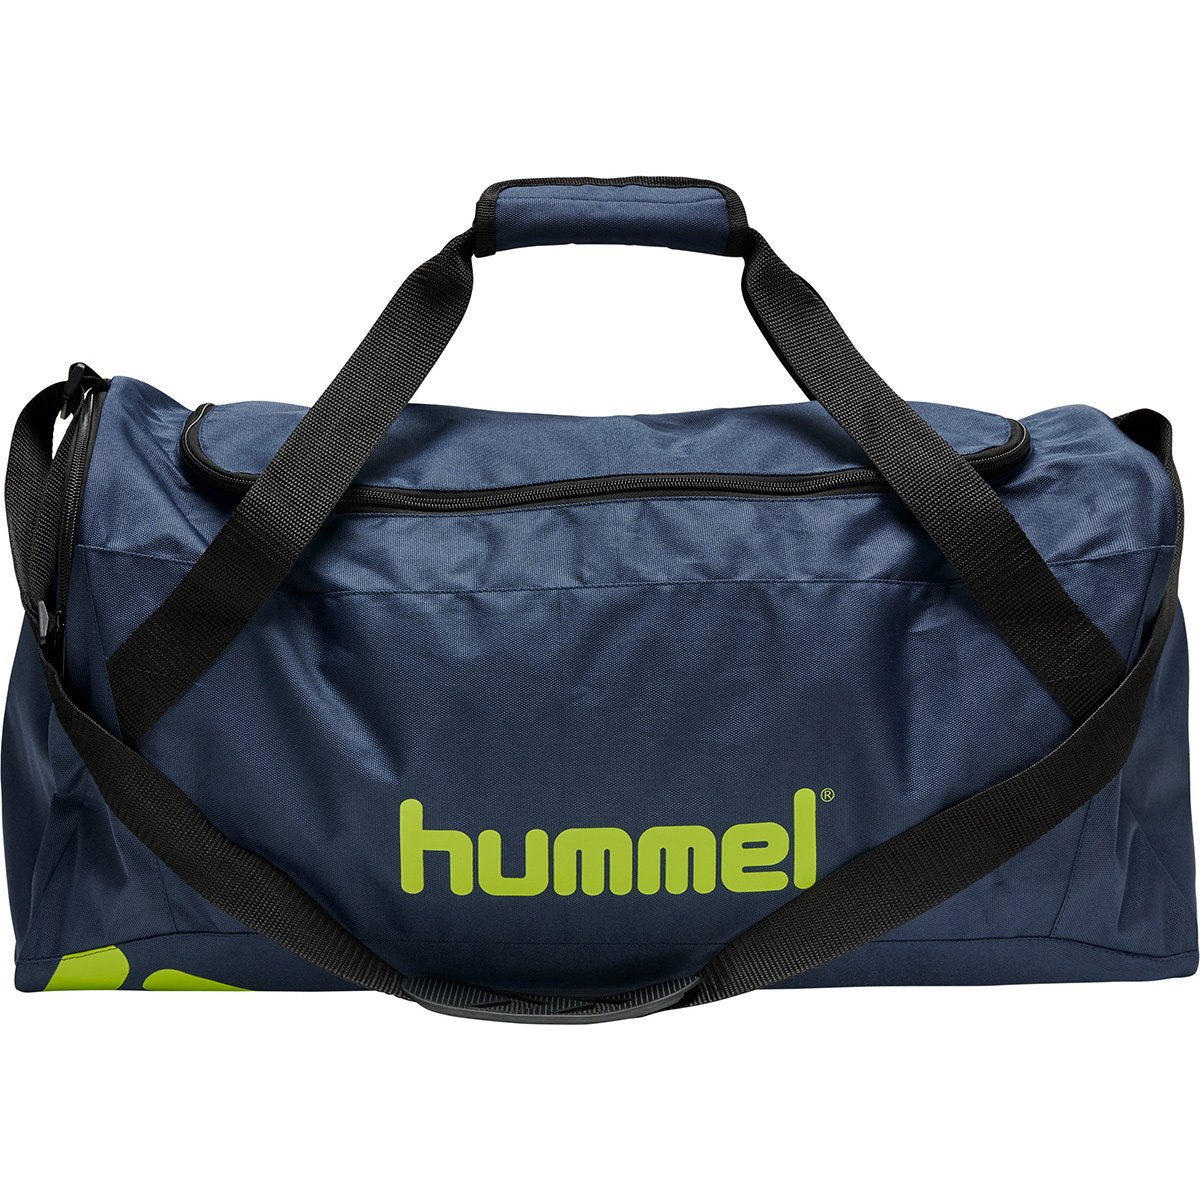 #2 - Hummel Core Sportstaske - Large, denim